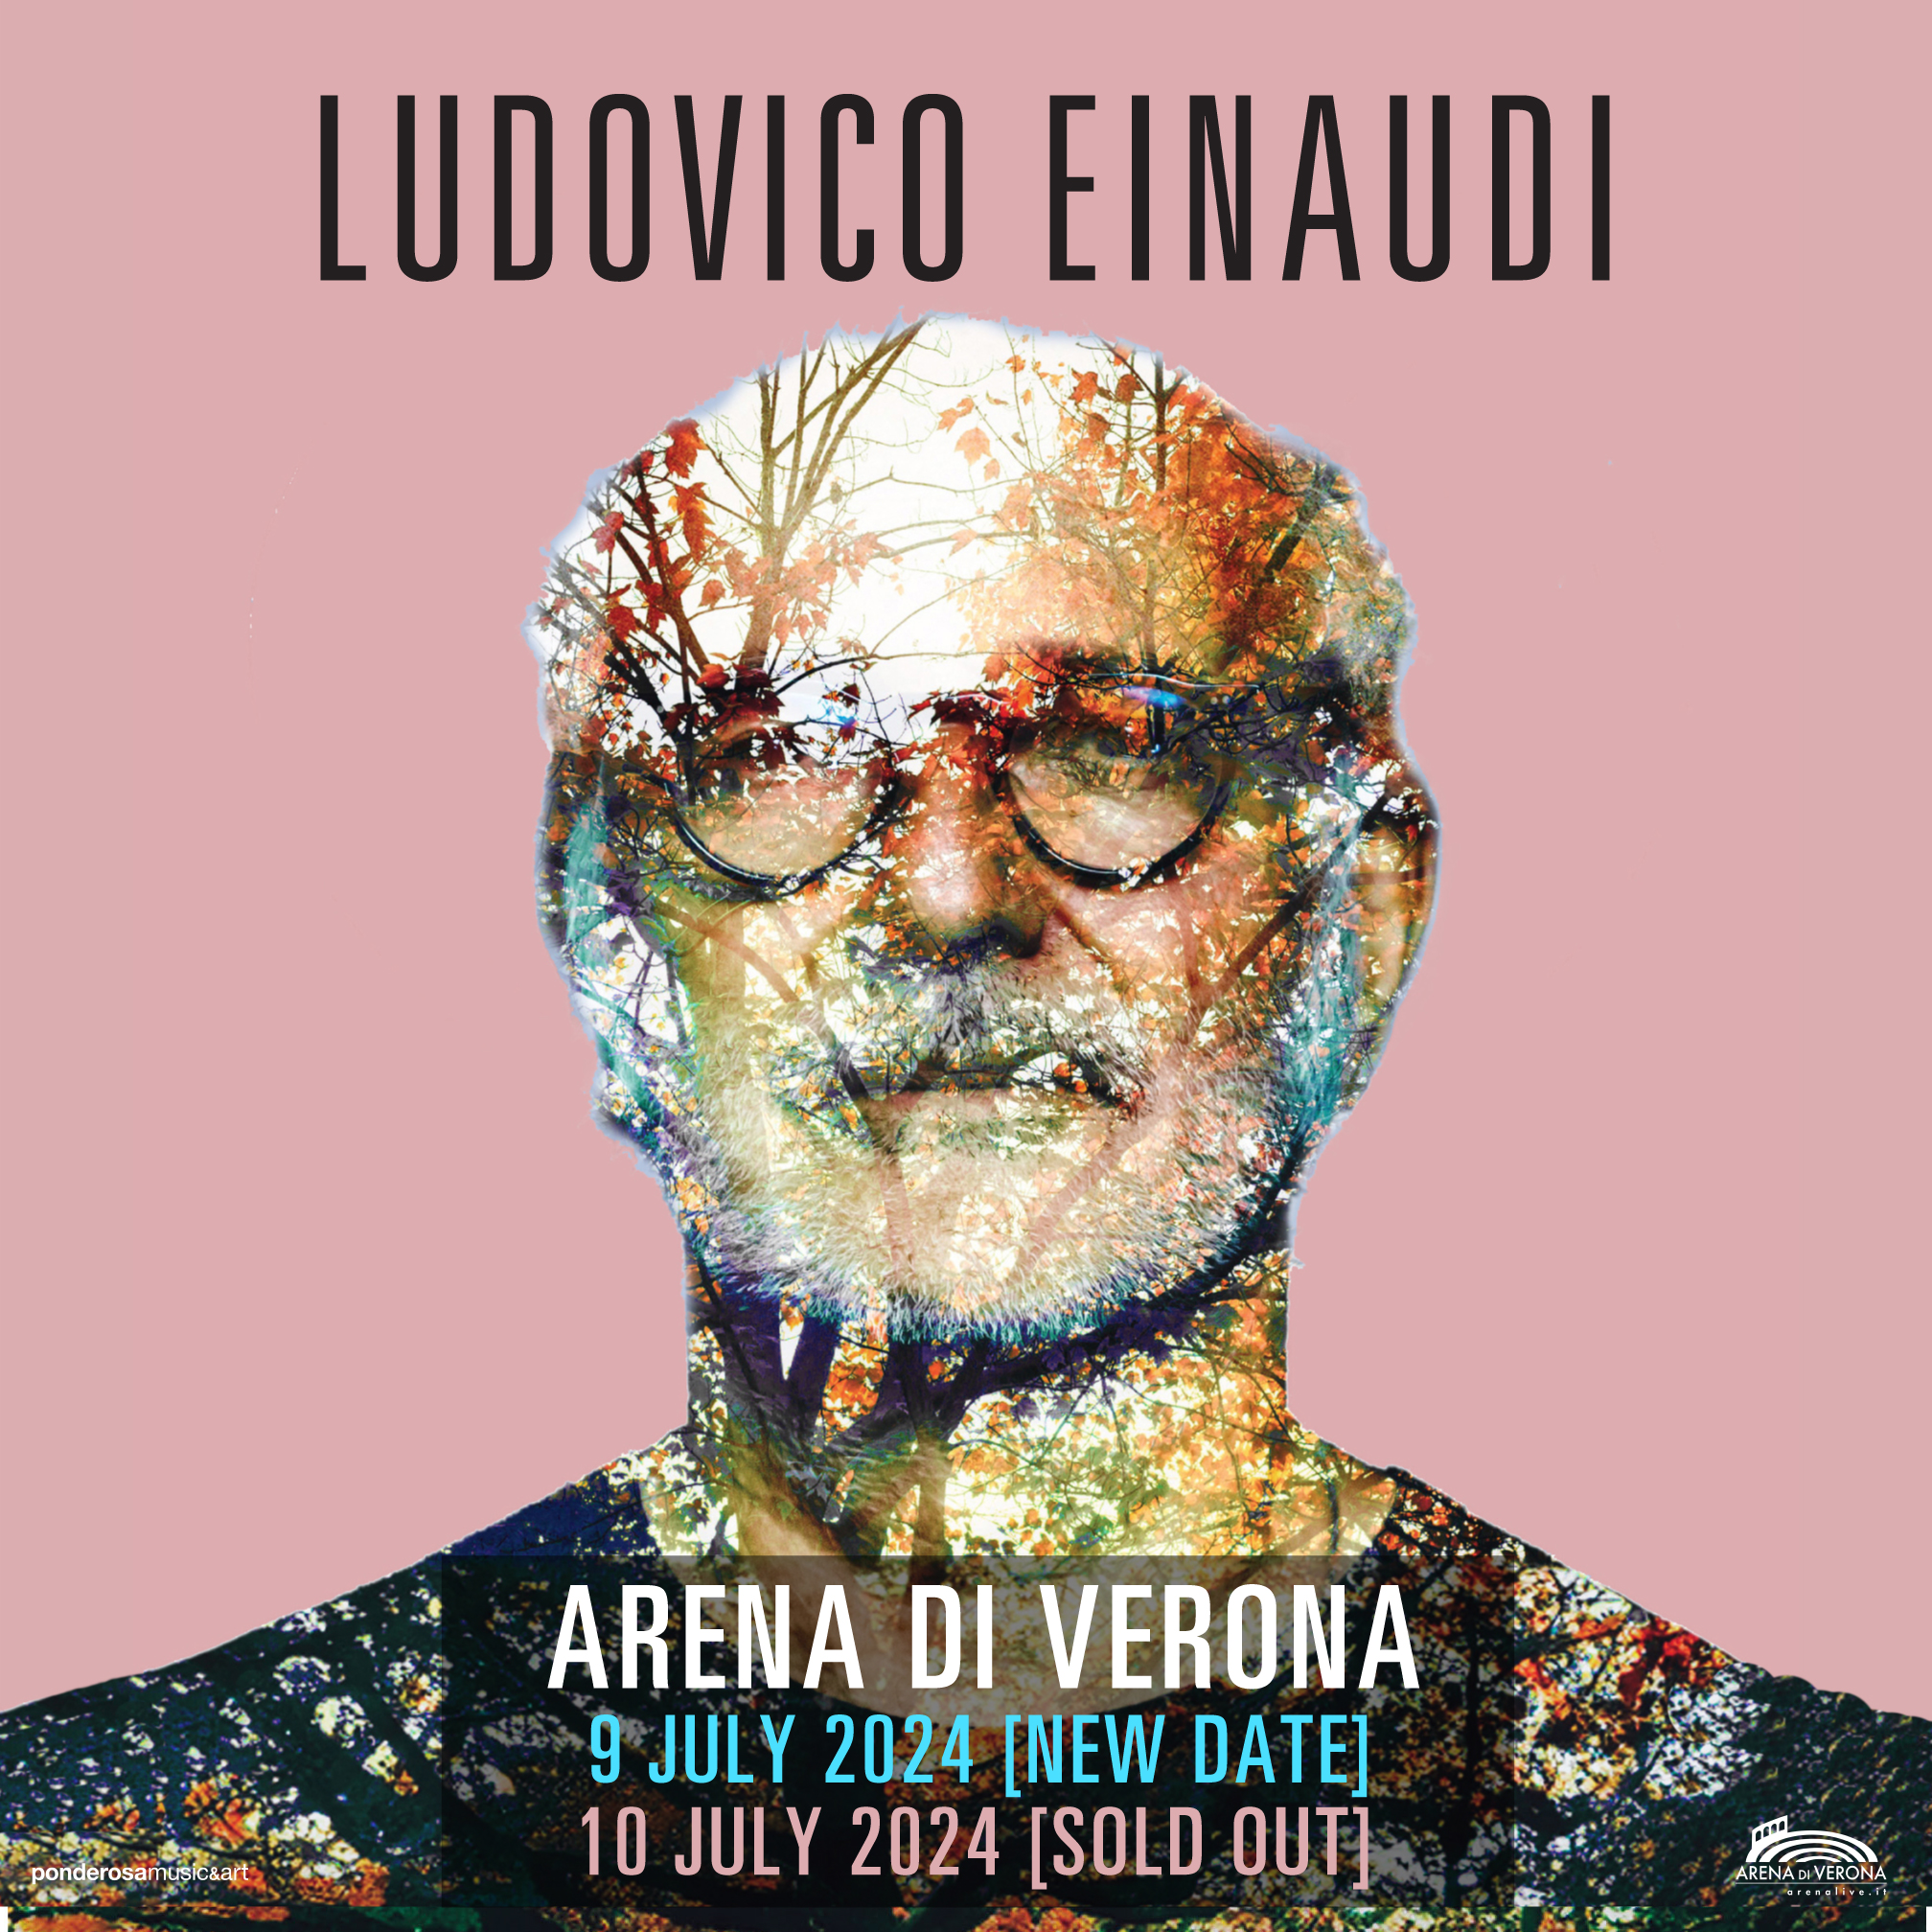 About – Ludovico Einaudi, ludovico einaudi 